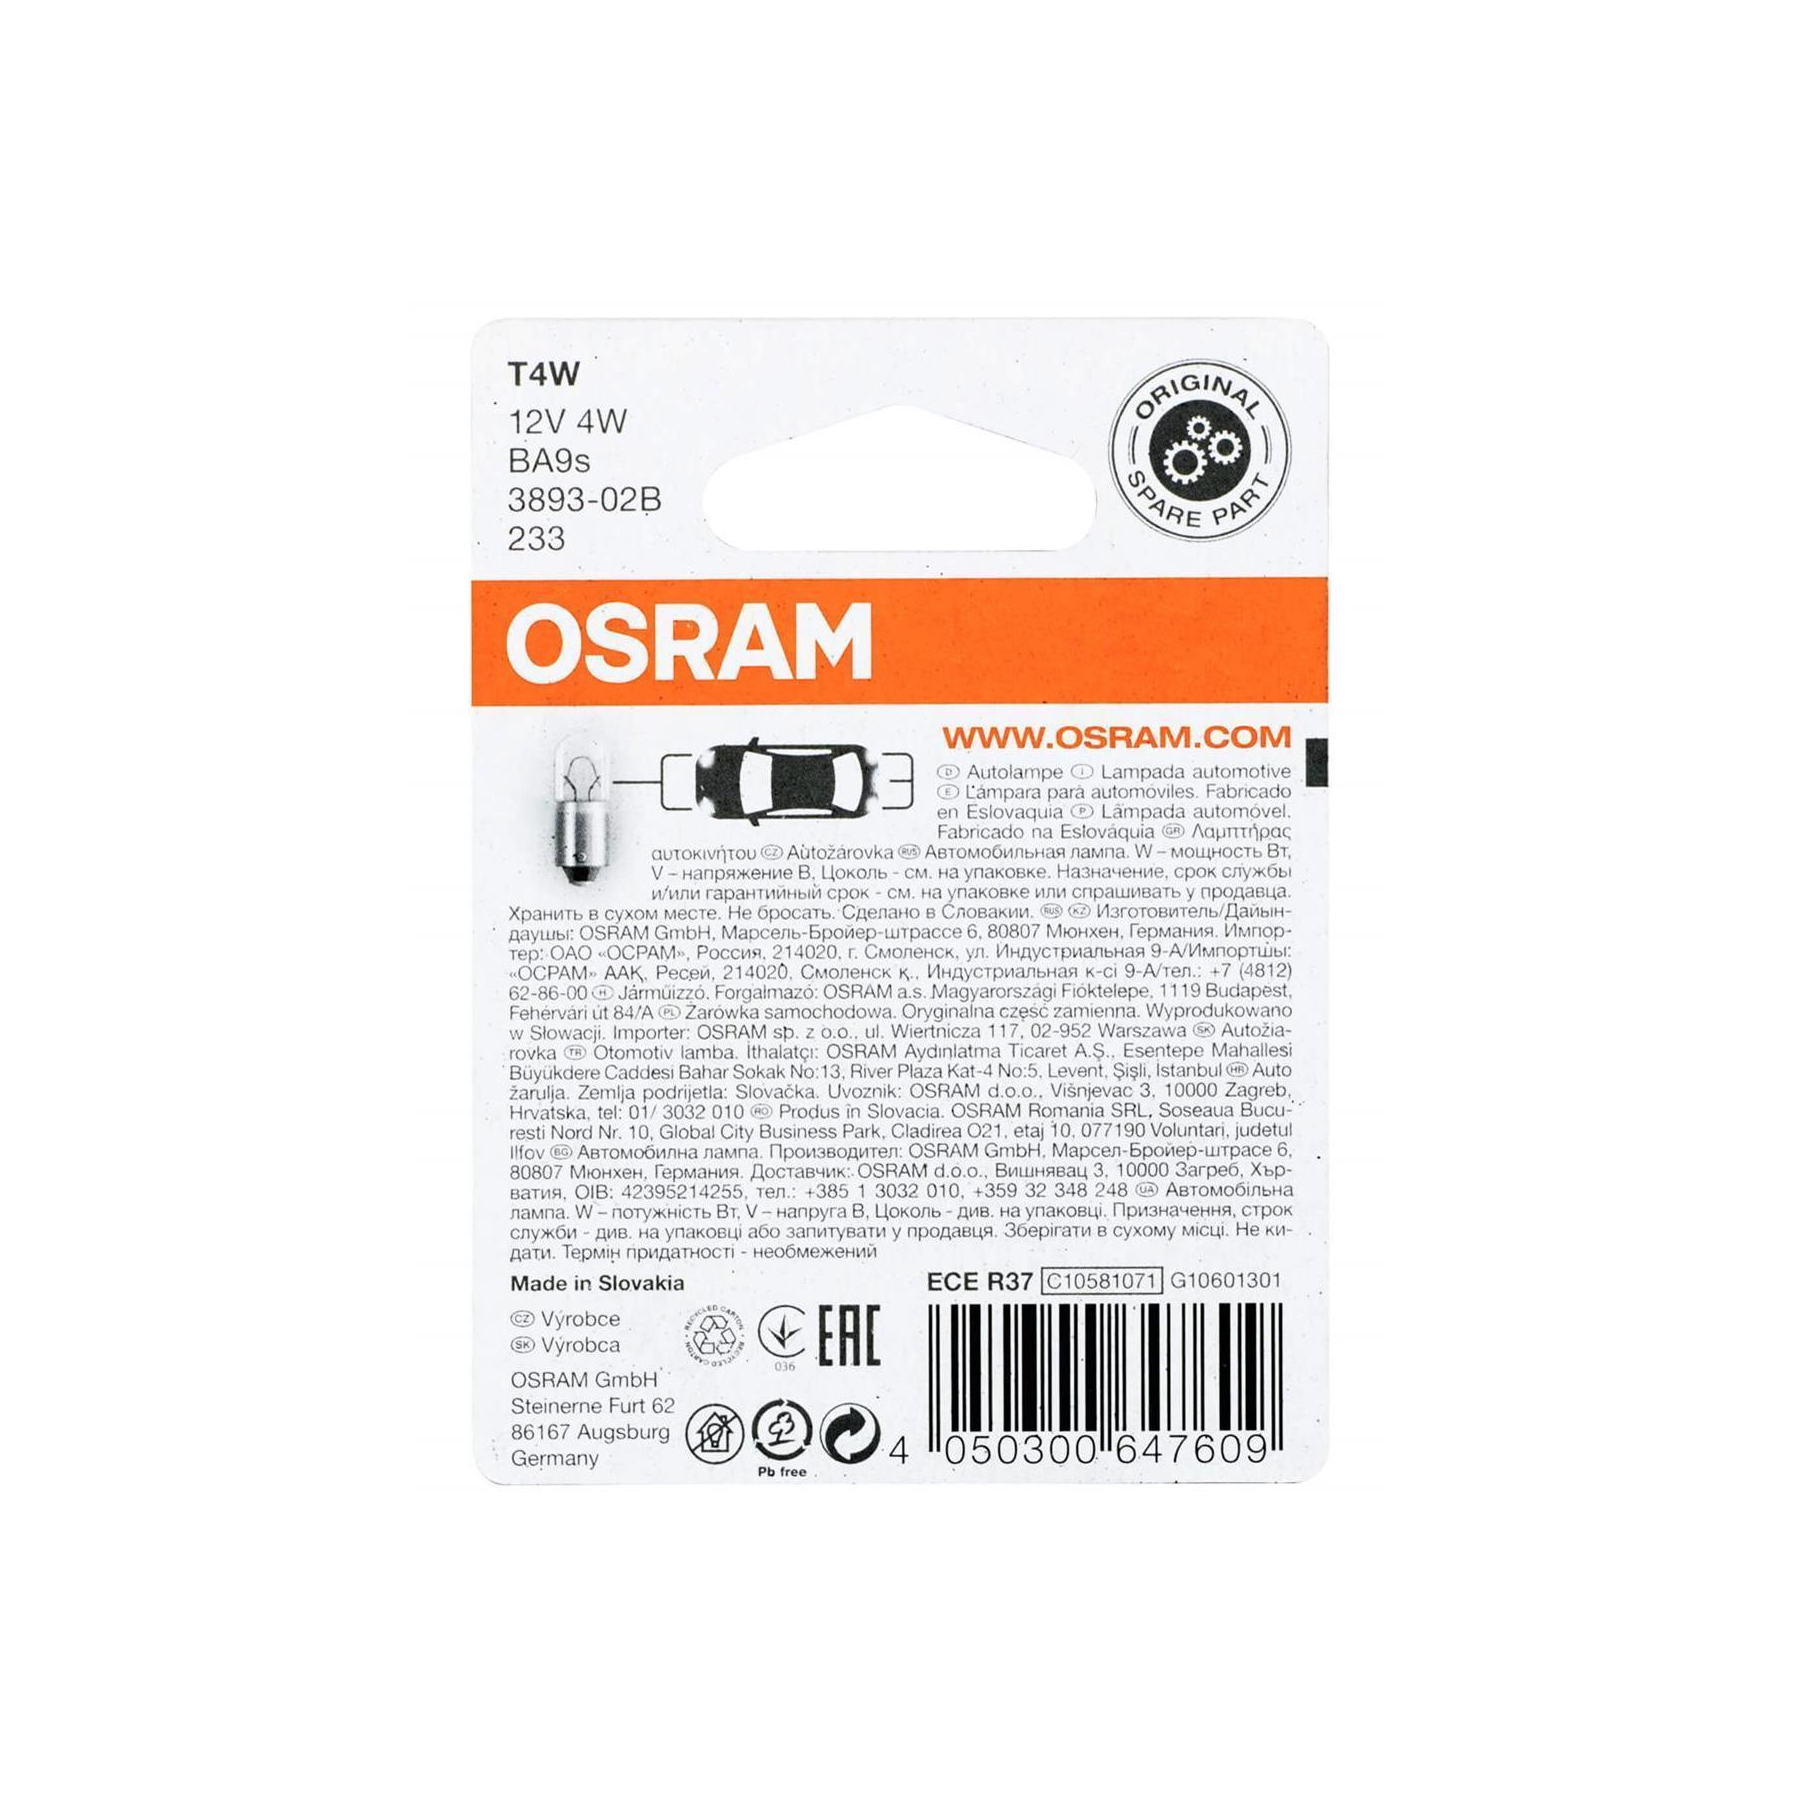 Osram T4W Original Line 3893-02B 12V Autolampen, 8,43 €